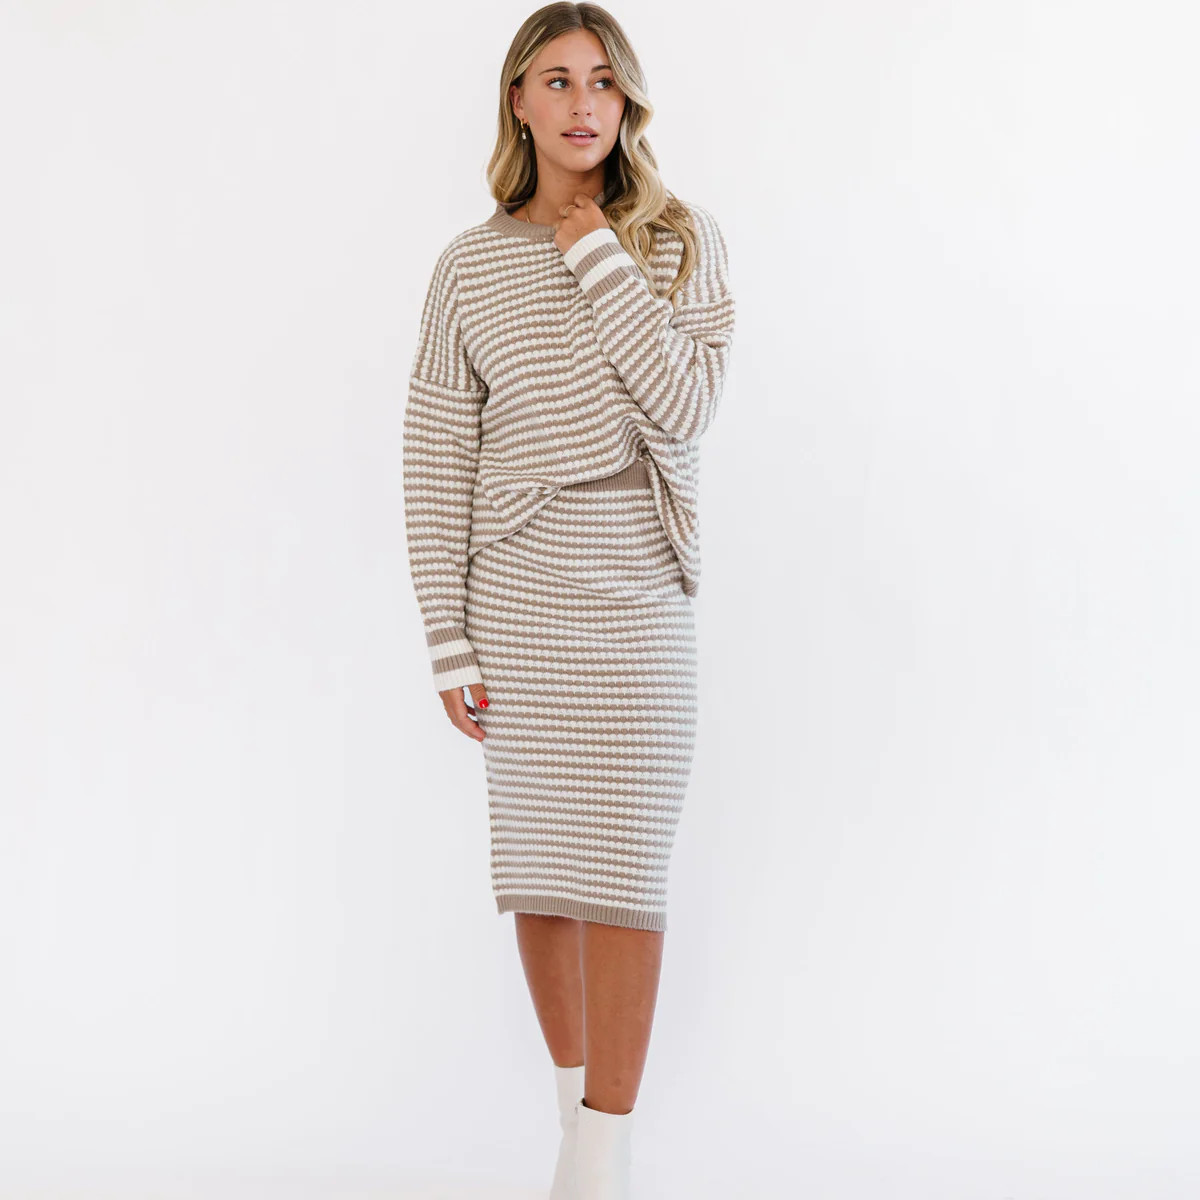 Winter Skirt and Sweater Set | FEHRNVI